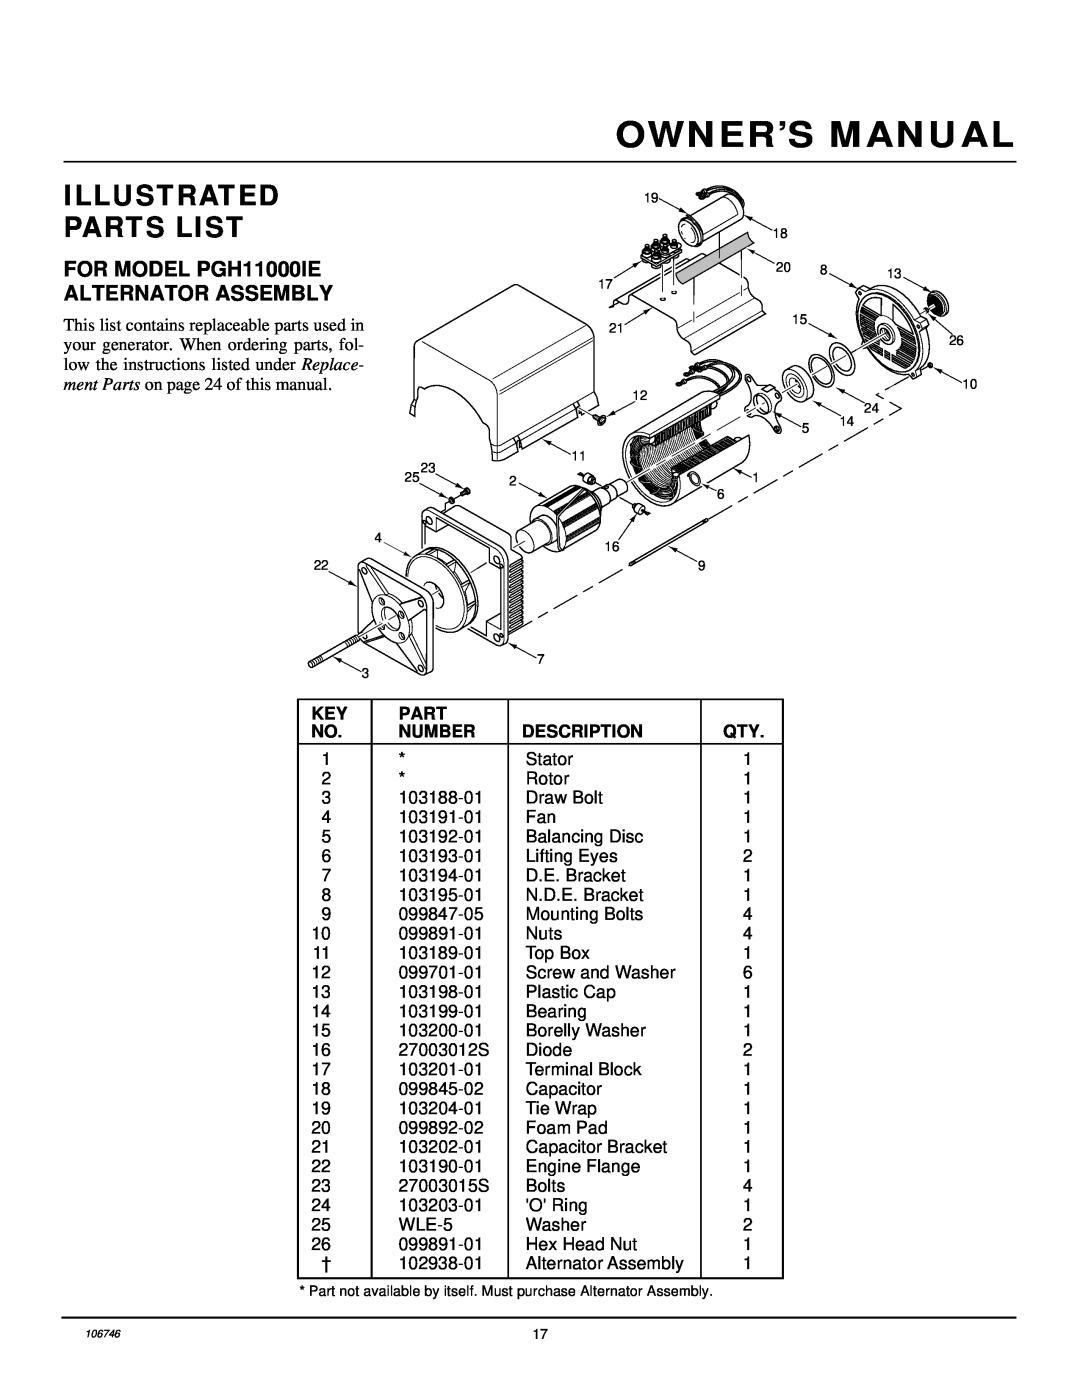 Desa PGH7500IE, PGH1100IE FOR MODEL PGH11000IE, Alternator Assembly, Owner’S Manual, Illustrated, Parts List 